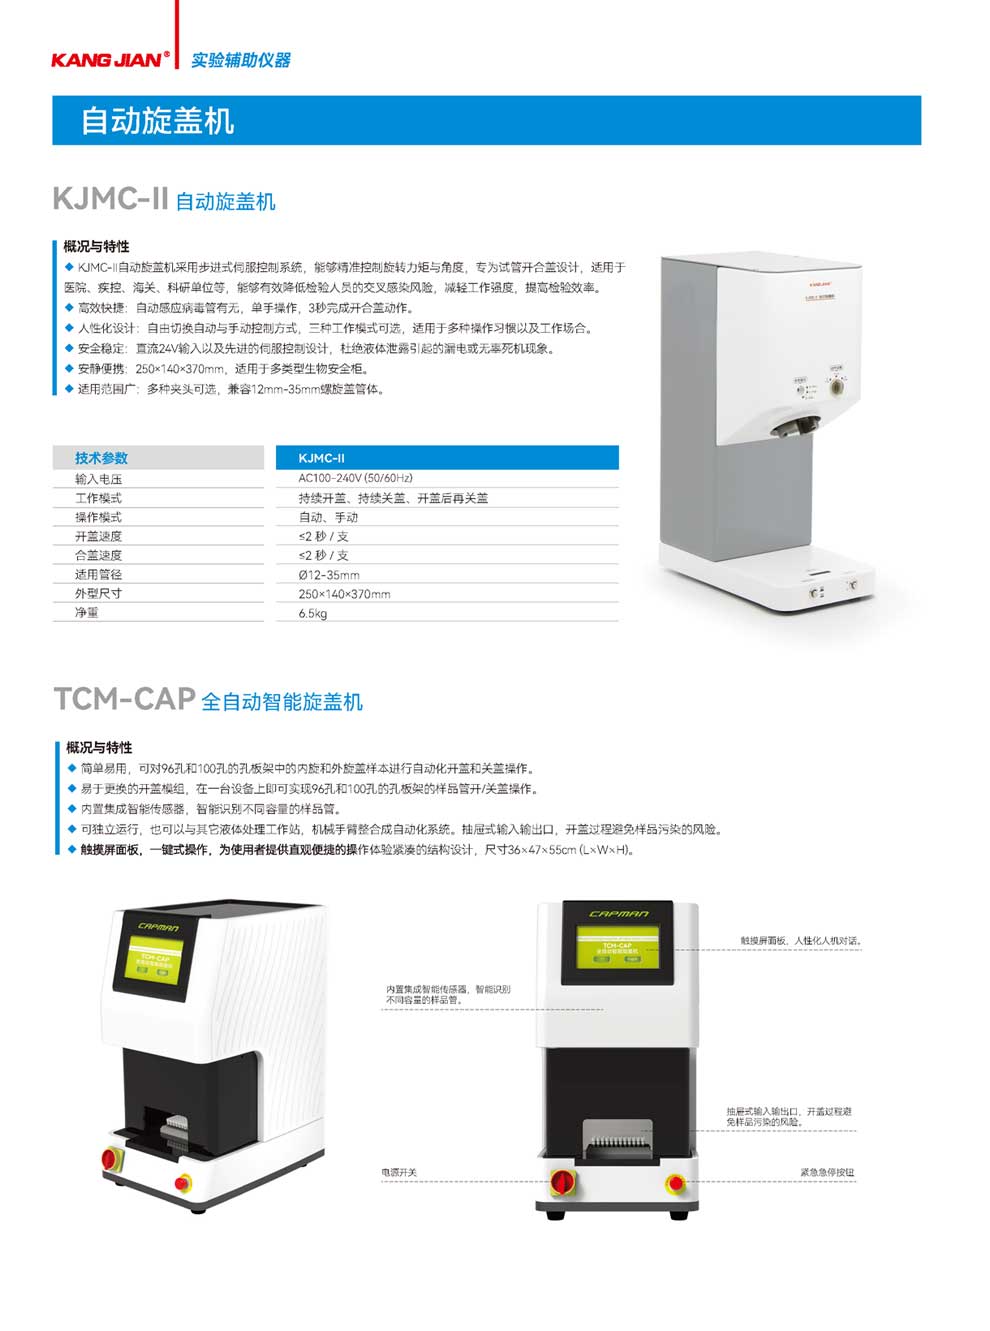 KJMC-II-TCM-CAP-彩页.jpg